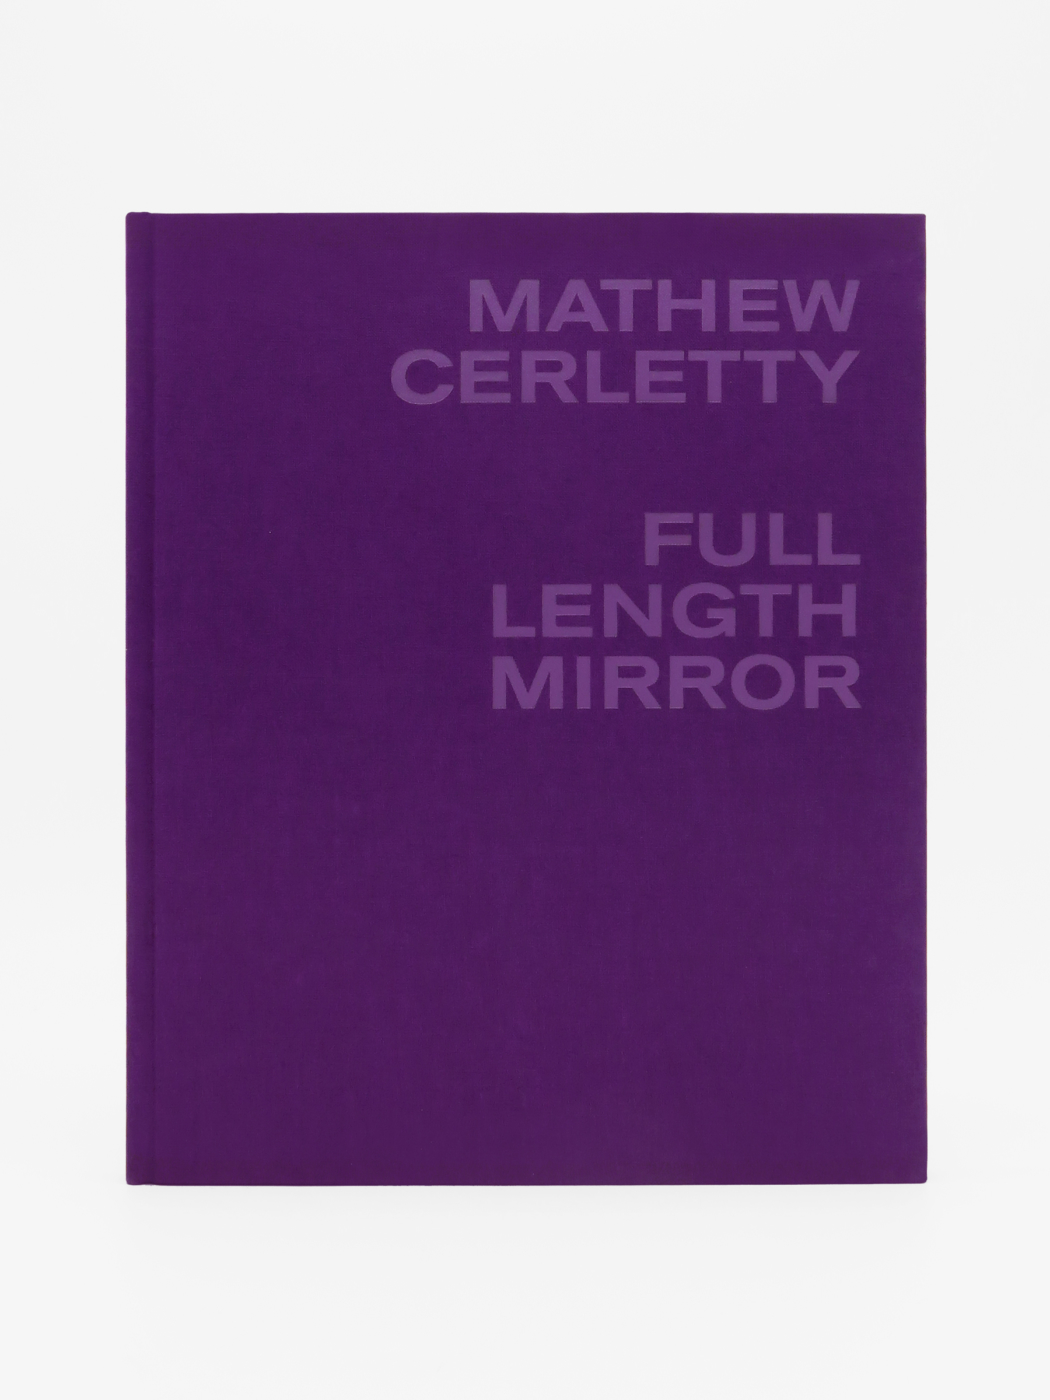 Mathew Cerletty, Full Length Mirror